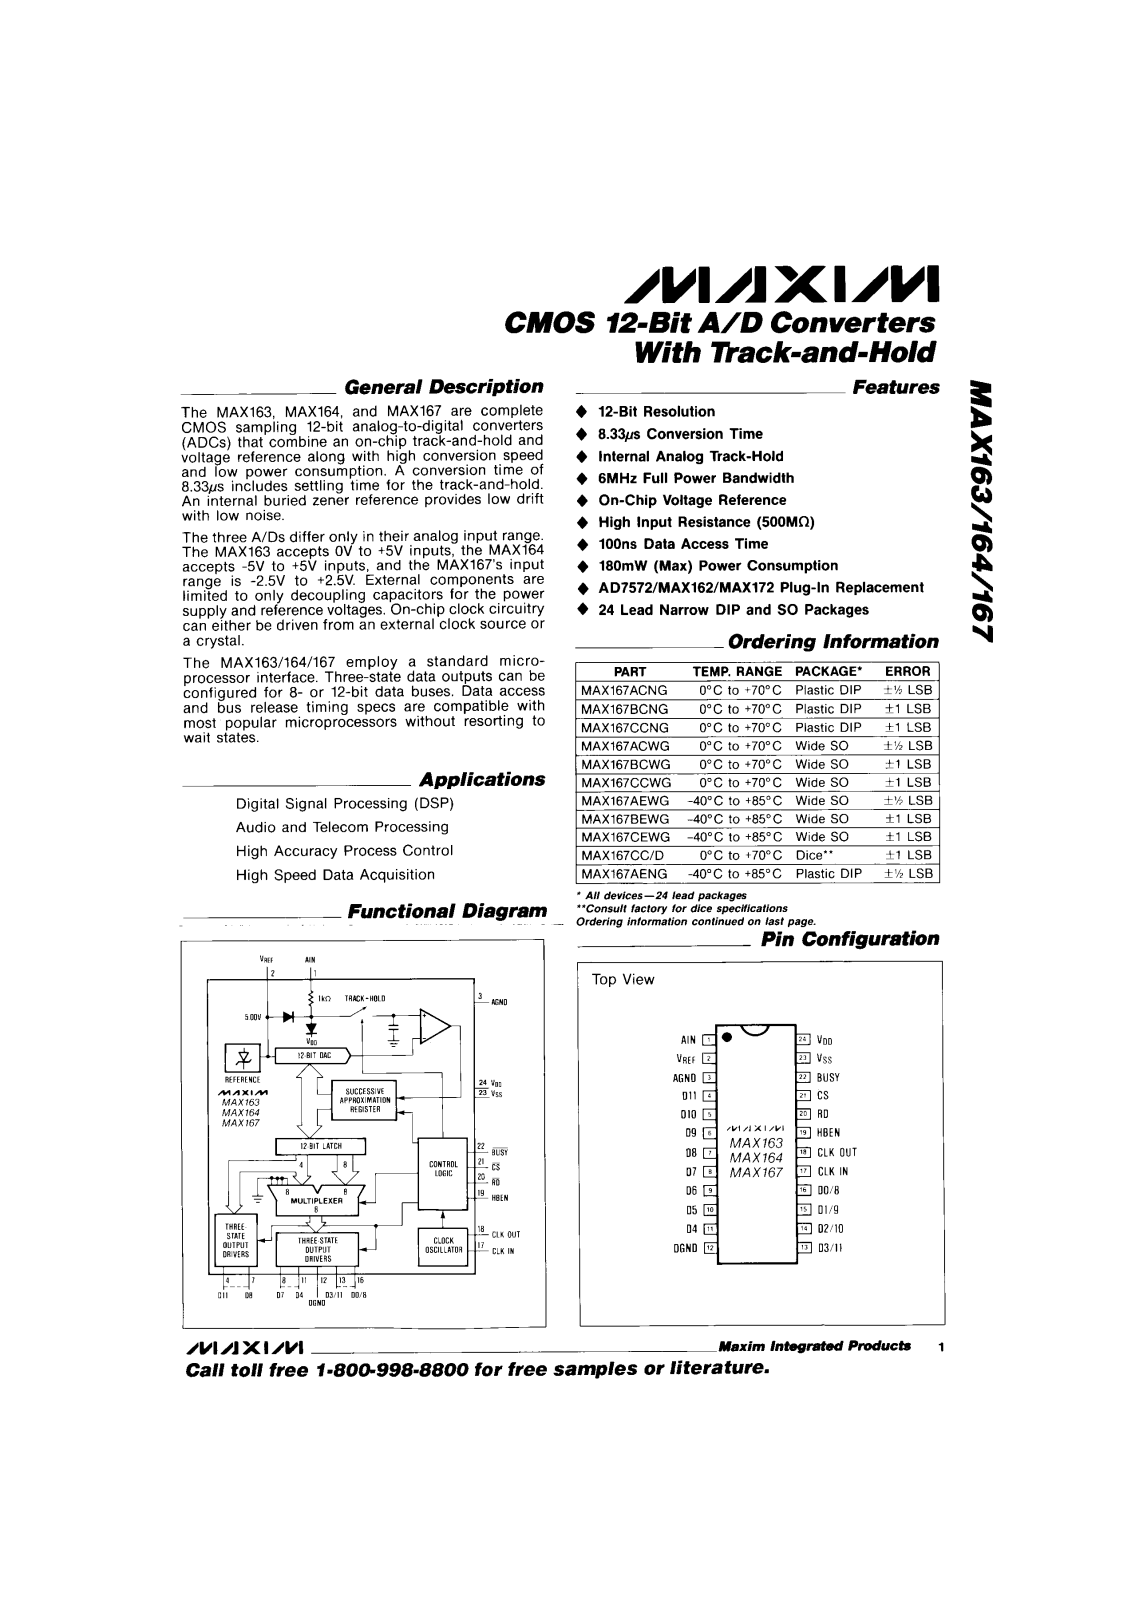 Maxim MAX167AEWG, MAX167ACWG, MAX167CMRG, MAX167CEWG, MAX167CENG Datasheet